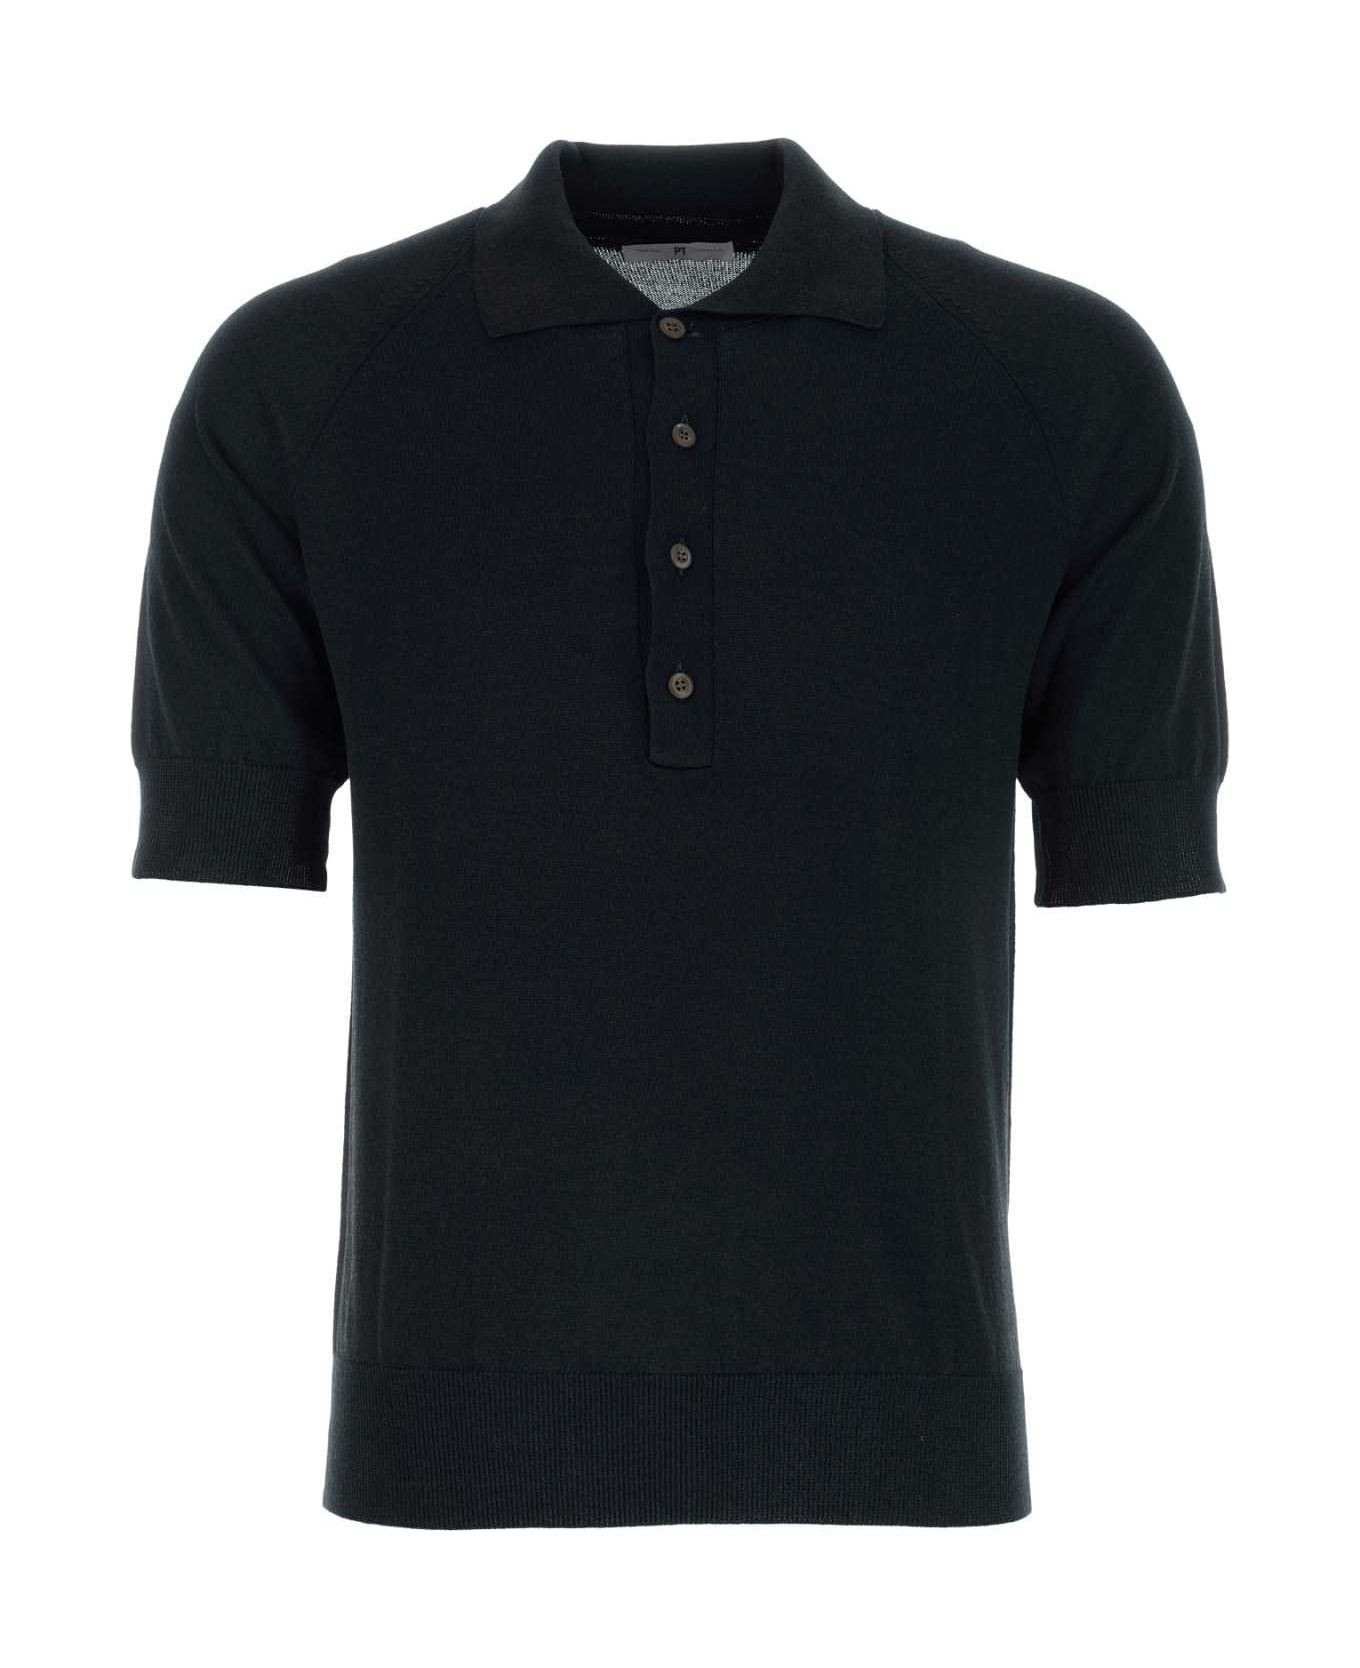 PT Torino Black Cotton Blend Polo Shirt - 0990 ポロシャツ